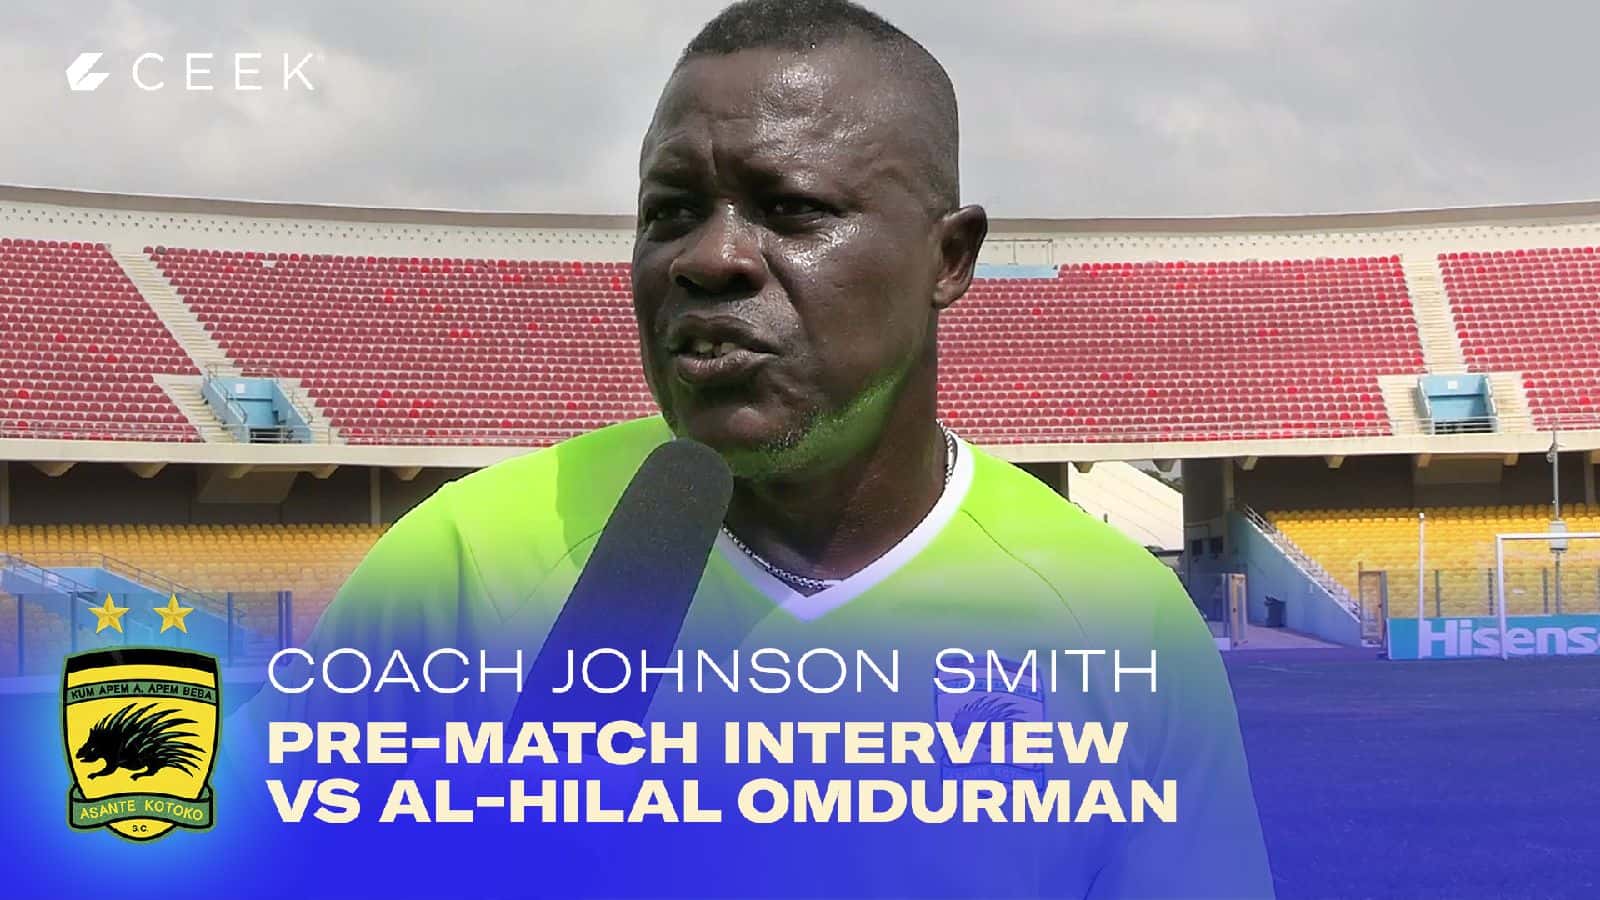 Coach Johnson Smith - Pre-match interview vrs Al-Hilal Omdurman